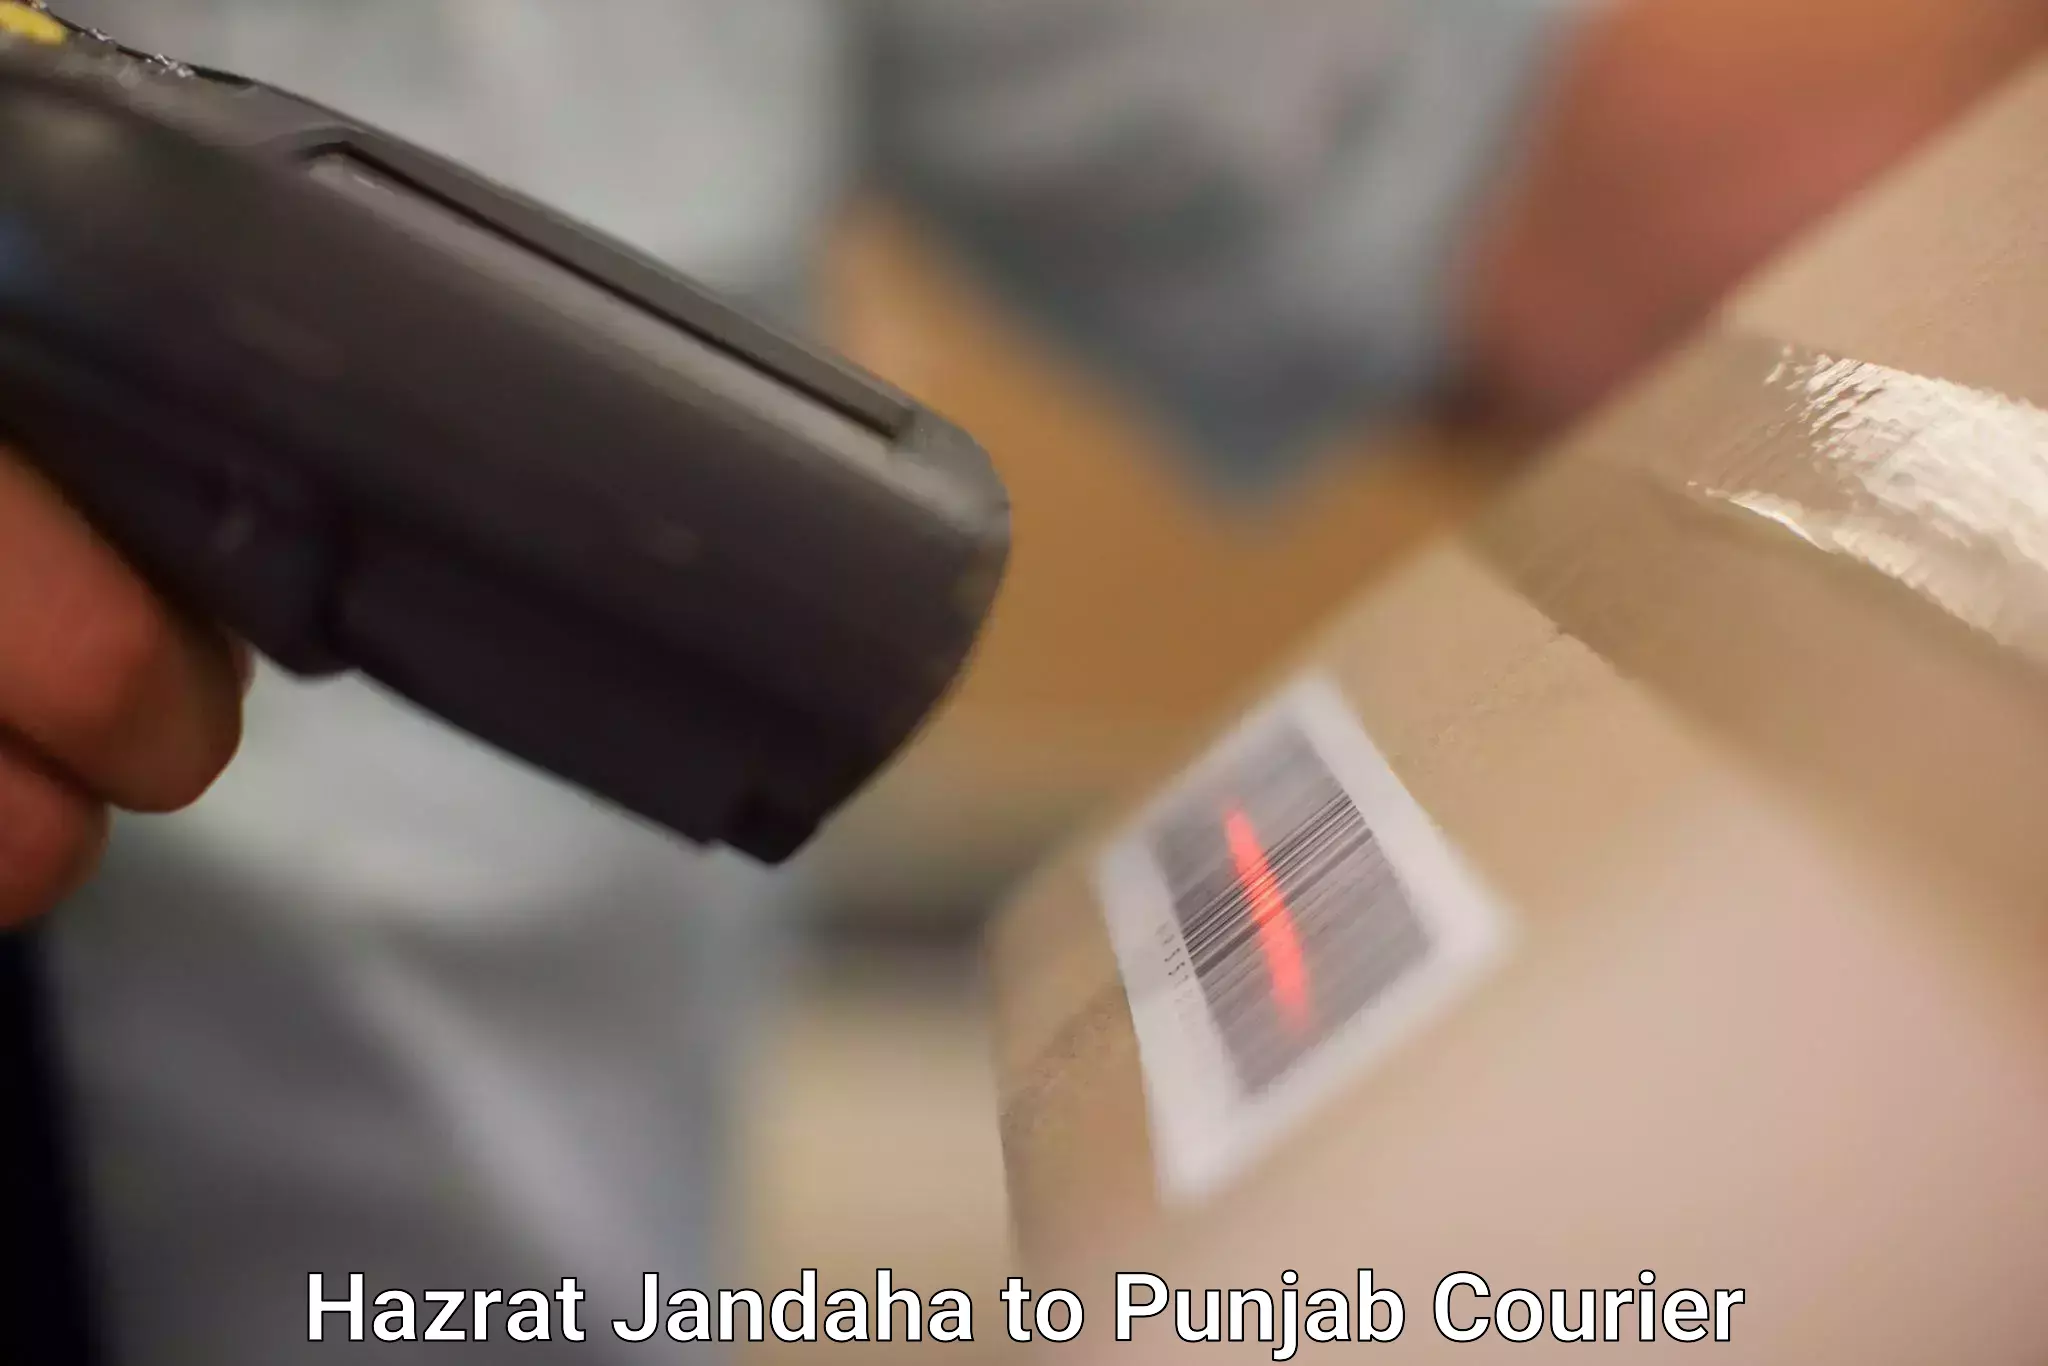 Courier service efficiency in Hazrat Jandaha to Punjab